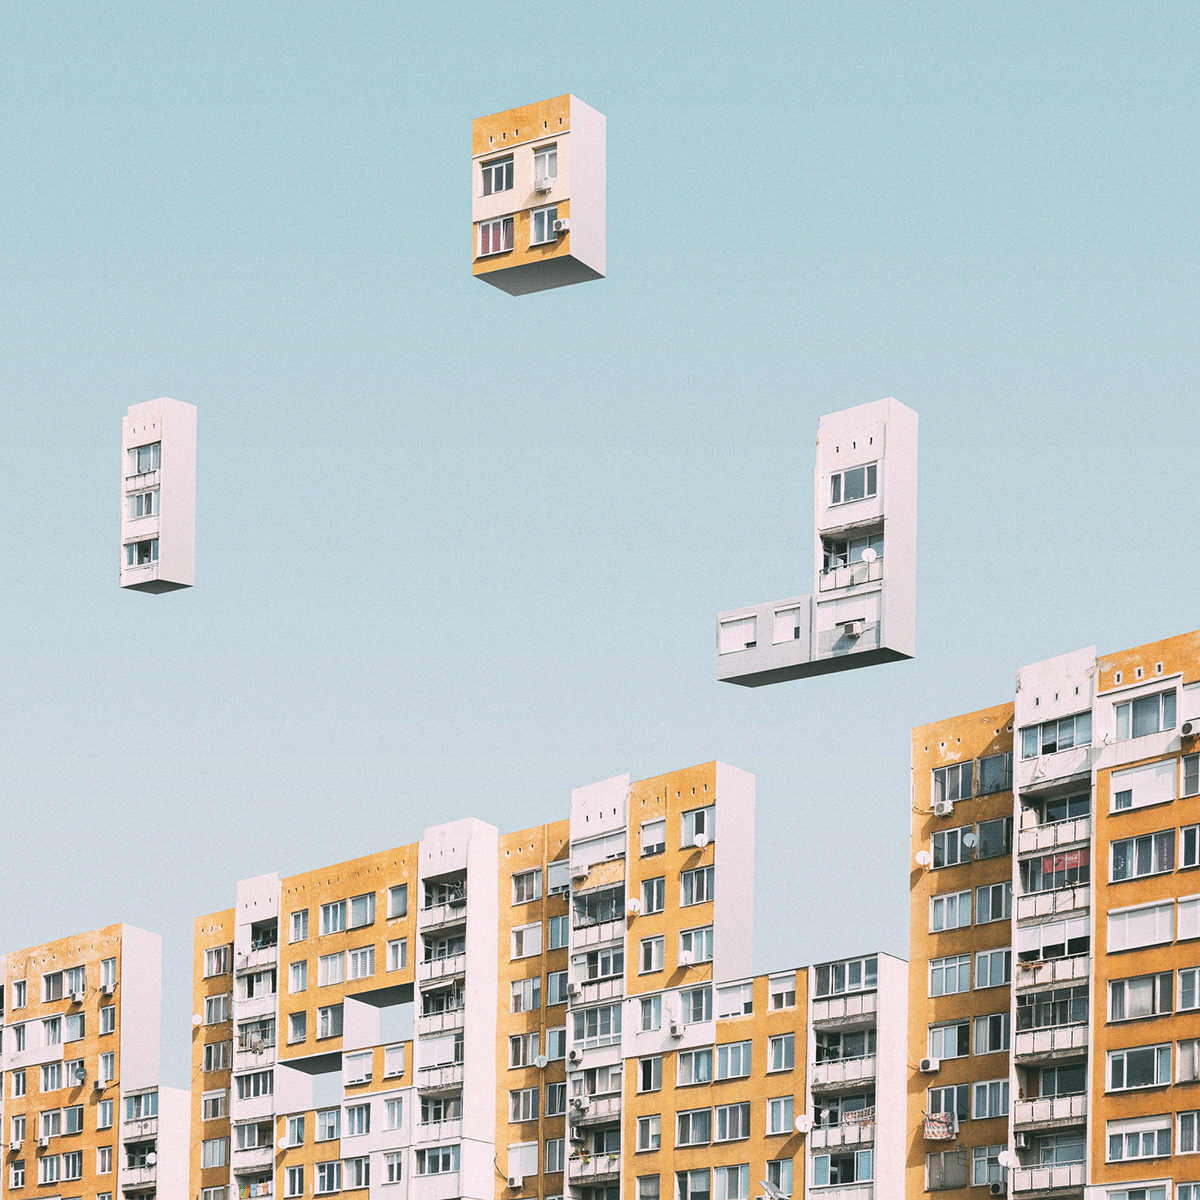 Urban Tetris by Mariyan Atanasov